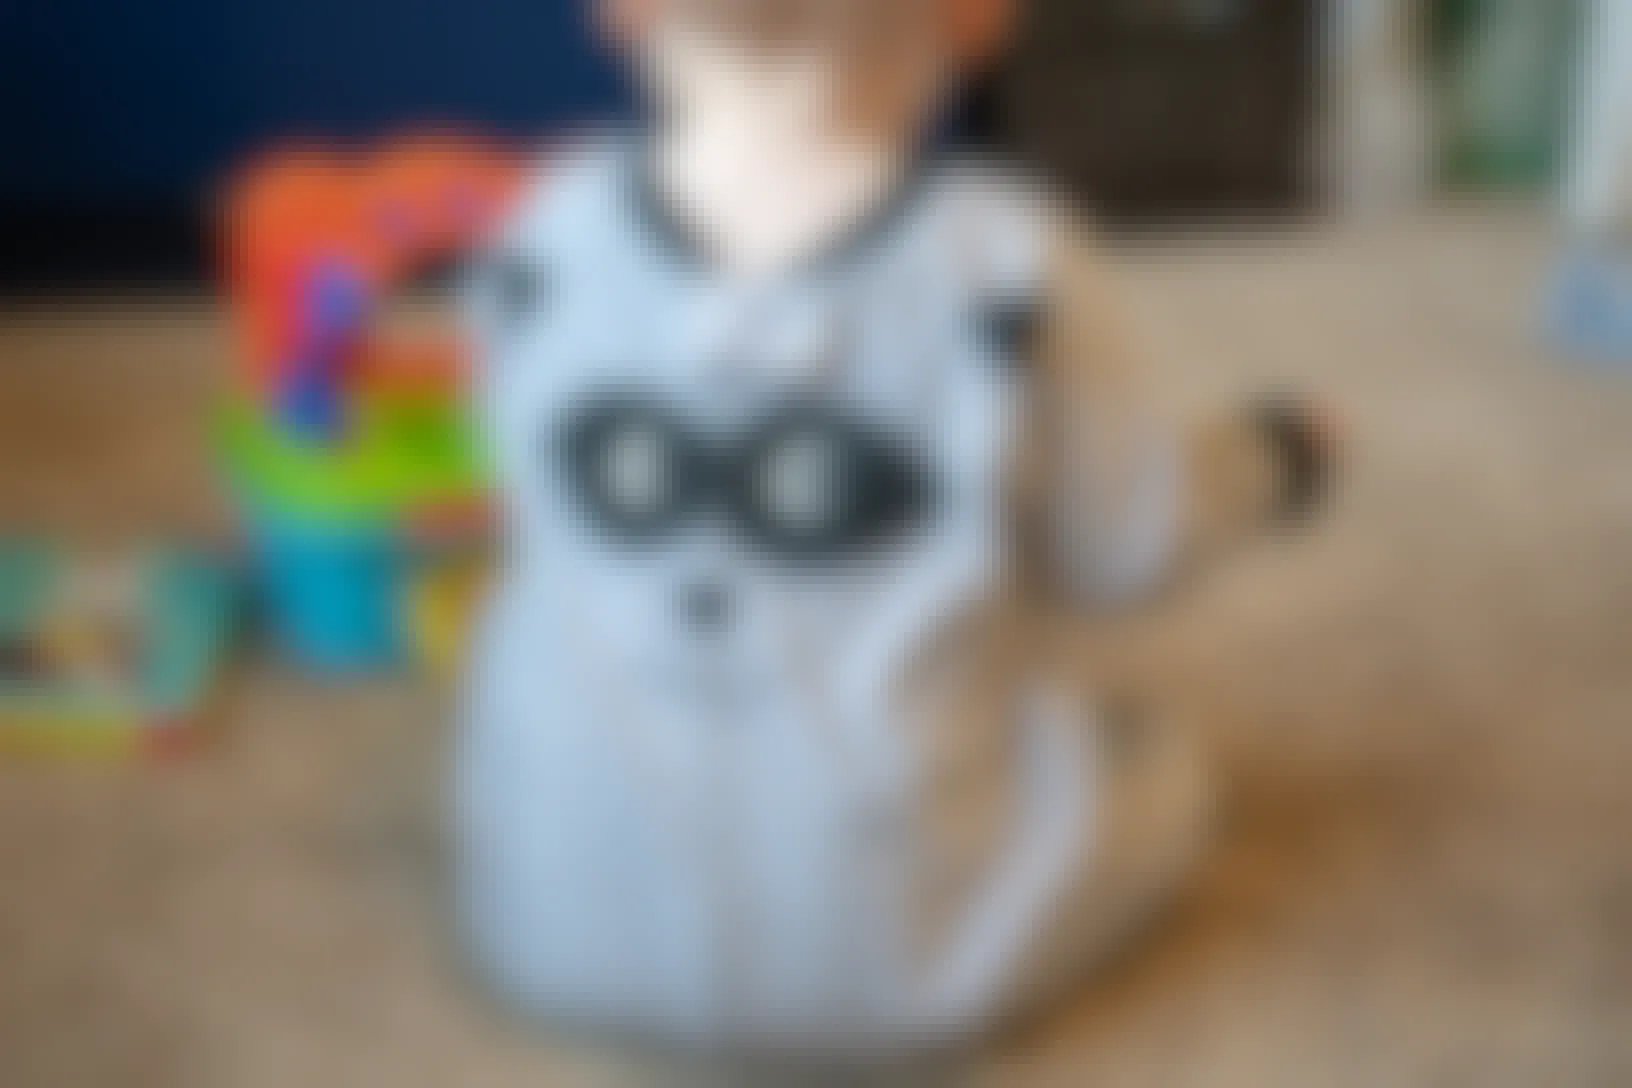 baby wearing backwards pajamas playing with toys